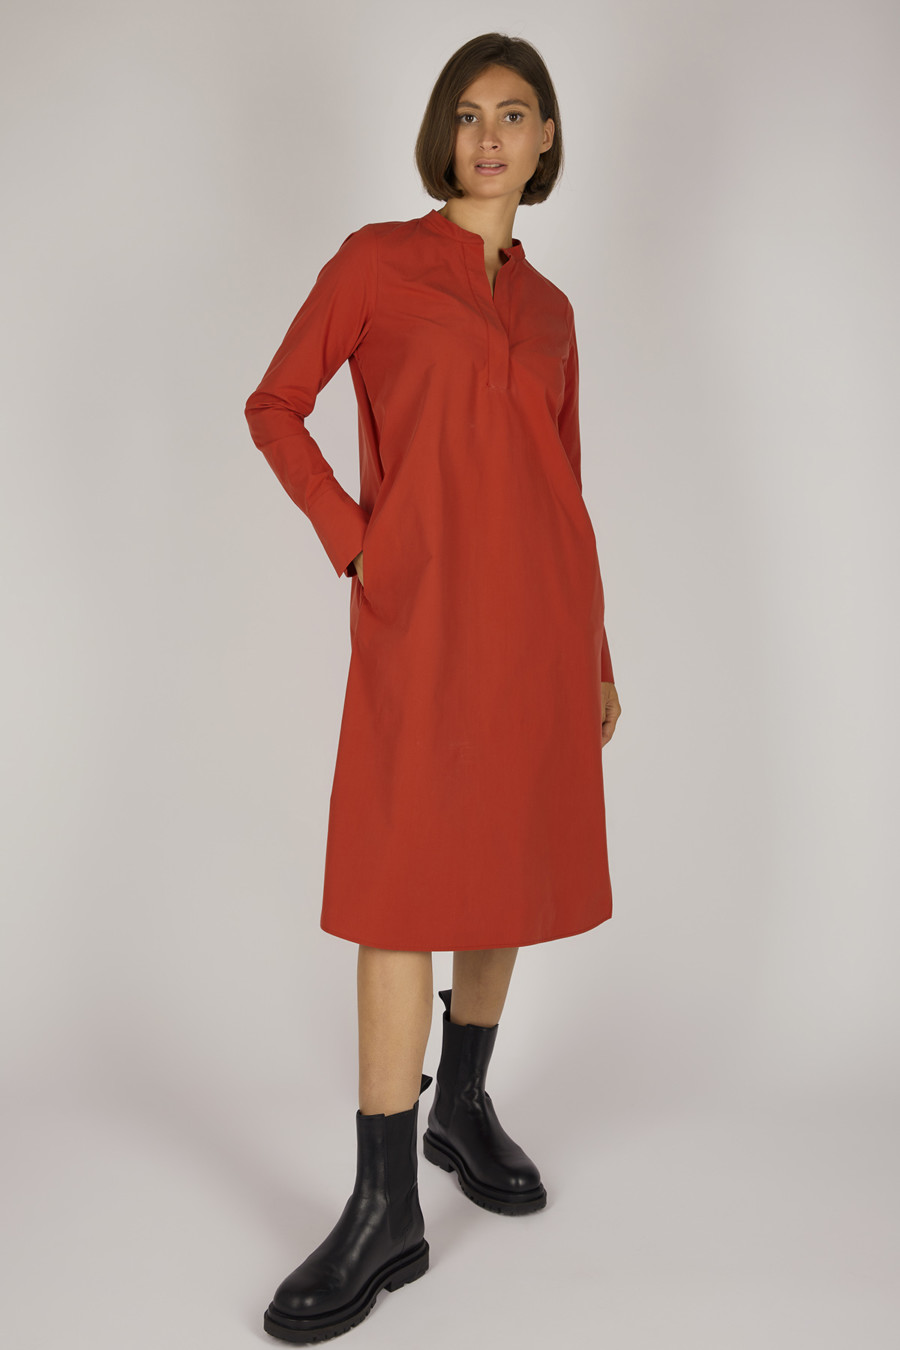 ETTA – Wadenlanges Baumwollkleid – Farbe: Red Hot